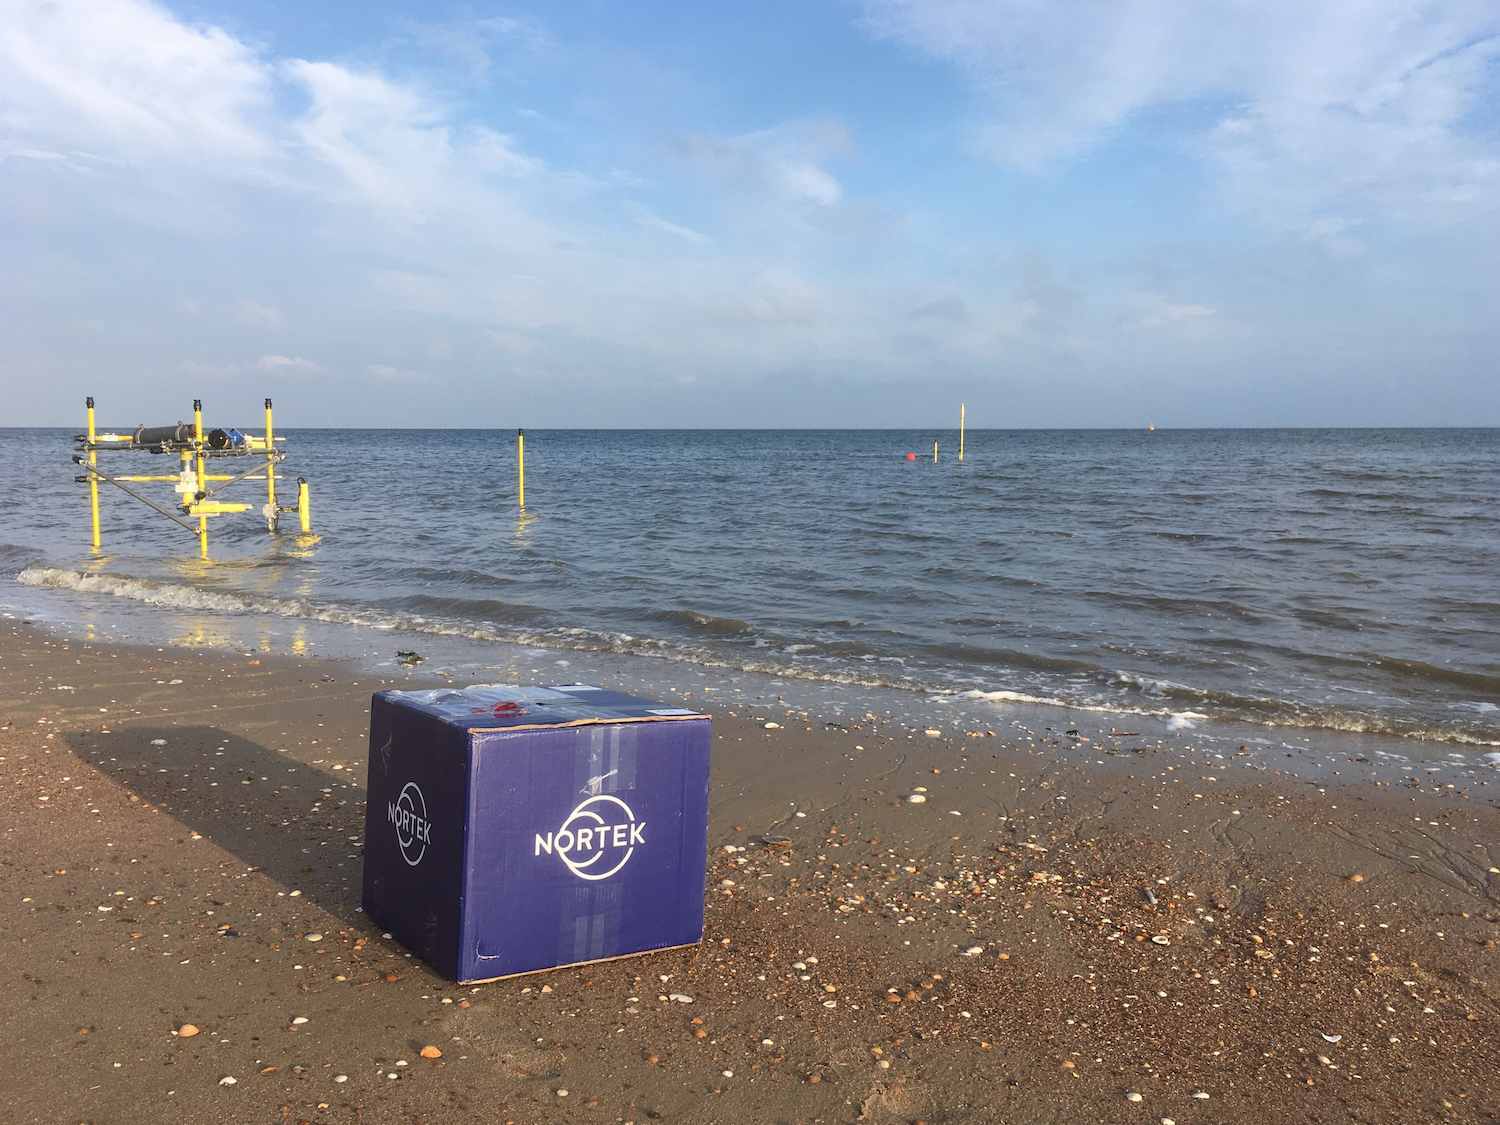 Nortek instrument box on the beach